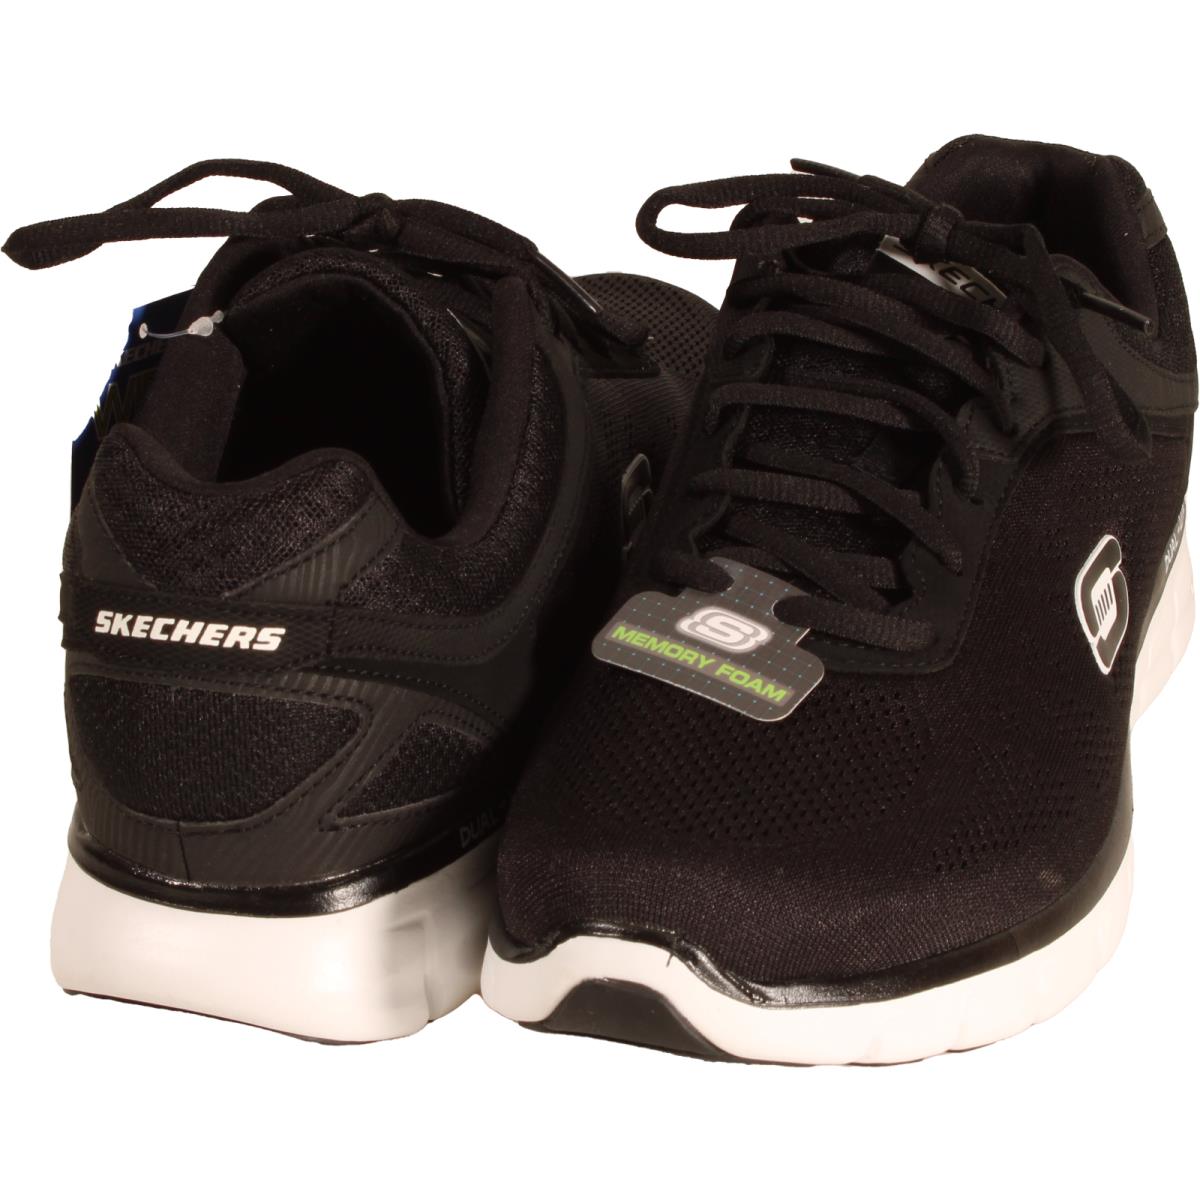 Skechers Skech Knit Dual Lite Mens Mid Top Running Shoes Black US Size 10 Wide - Black